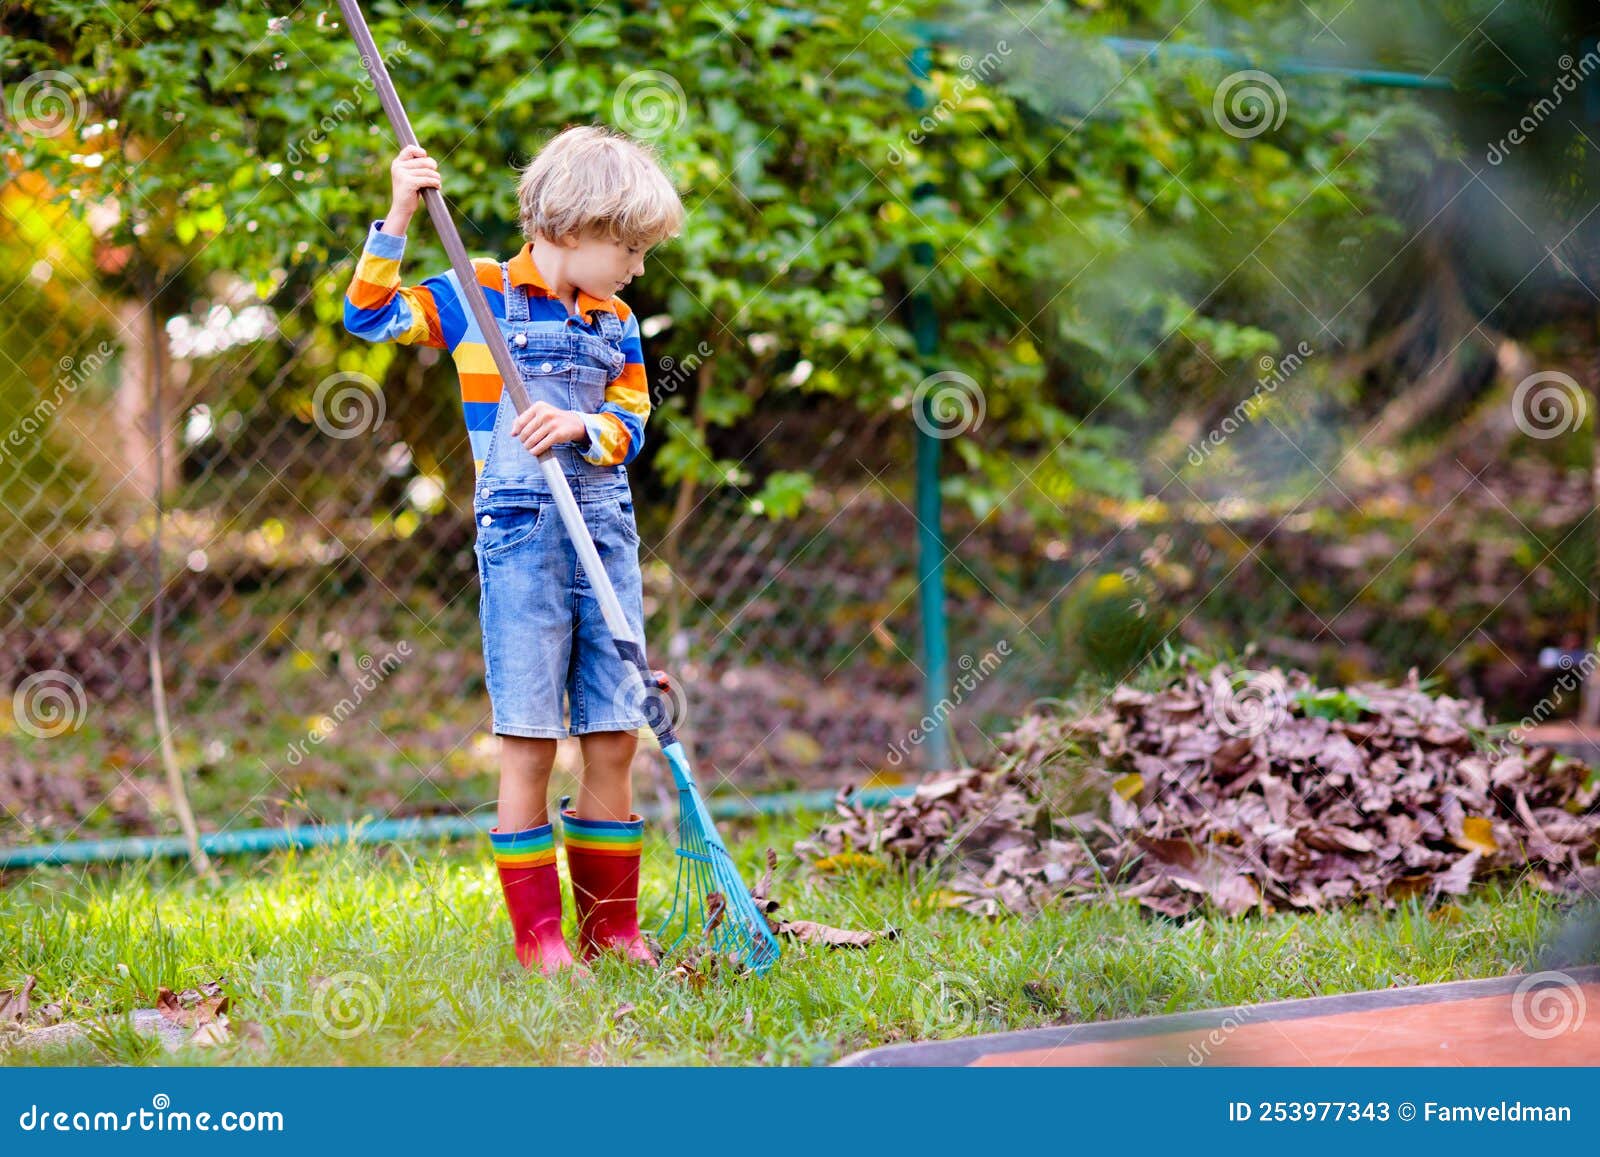 Child and Rake in Autumn Garden. Kid Raking Leaves Stock Image - Image ...